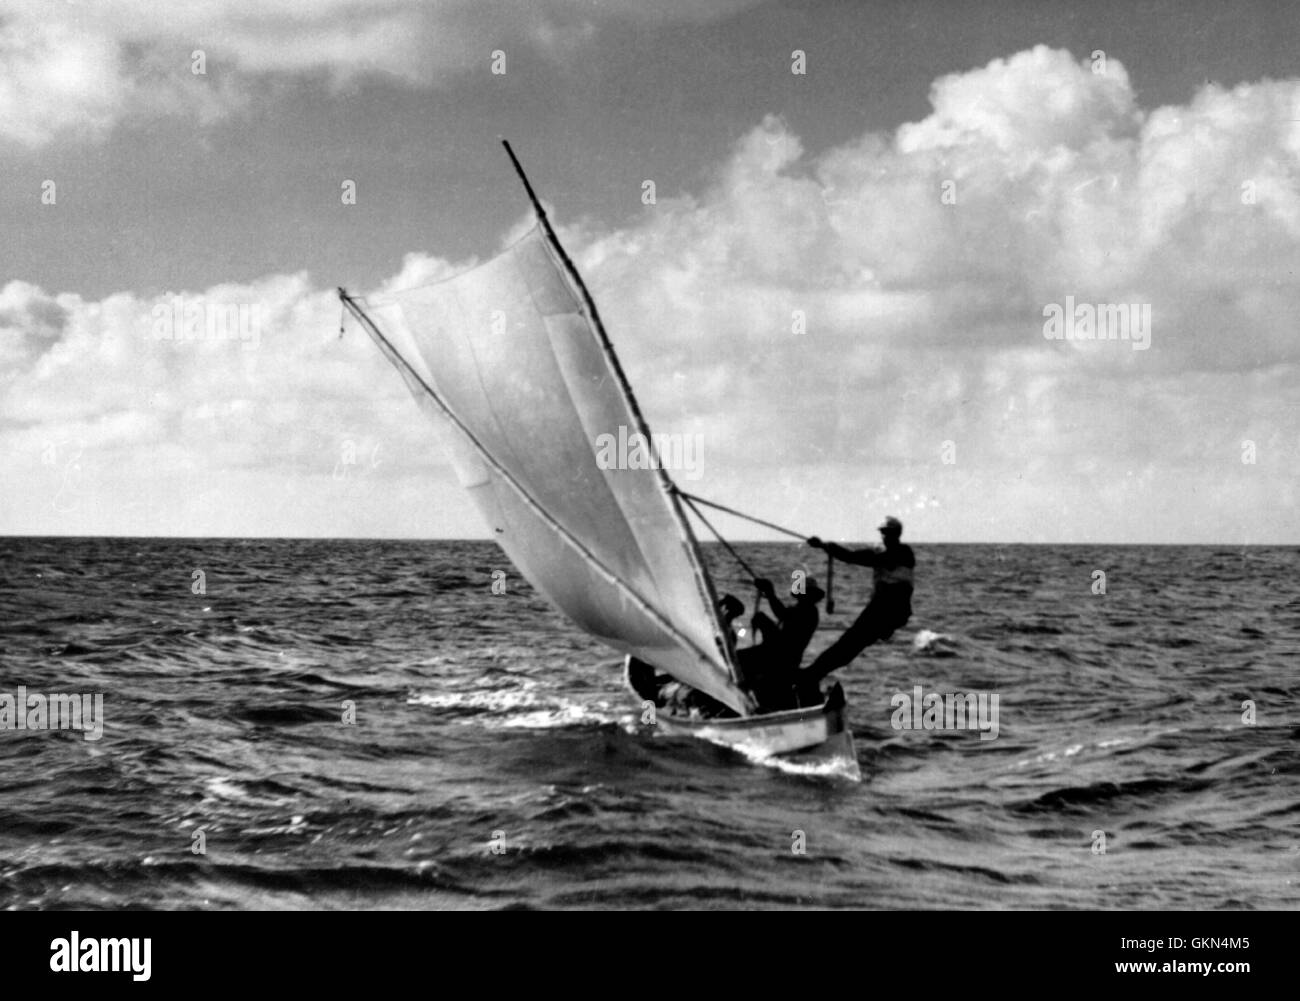 AJAXNETPHOTO. 1954. ST.LUCIA, WEST INDIES. - Vela uno dell'isola canoe da pesca. Foto; REG CALVERT/AJAX ©AJAX NEWS & FEATURE SERVICE/REG CALVERT collezione REF:canoa RC1954 2 Foto Stock